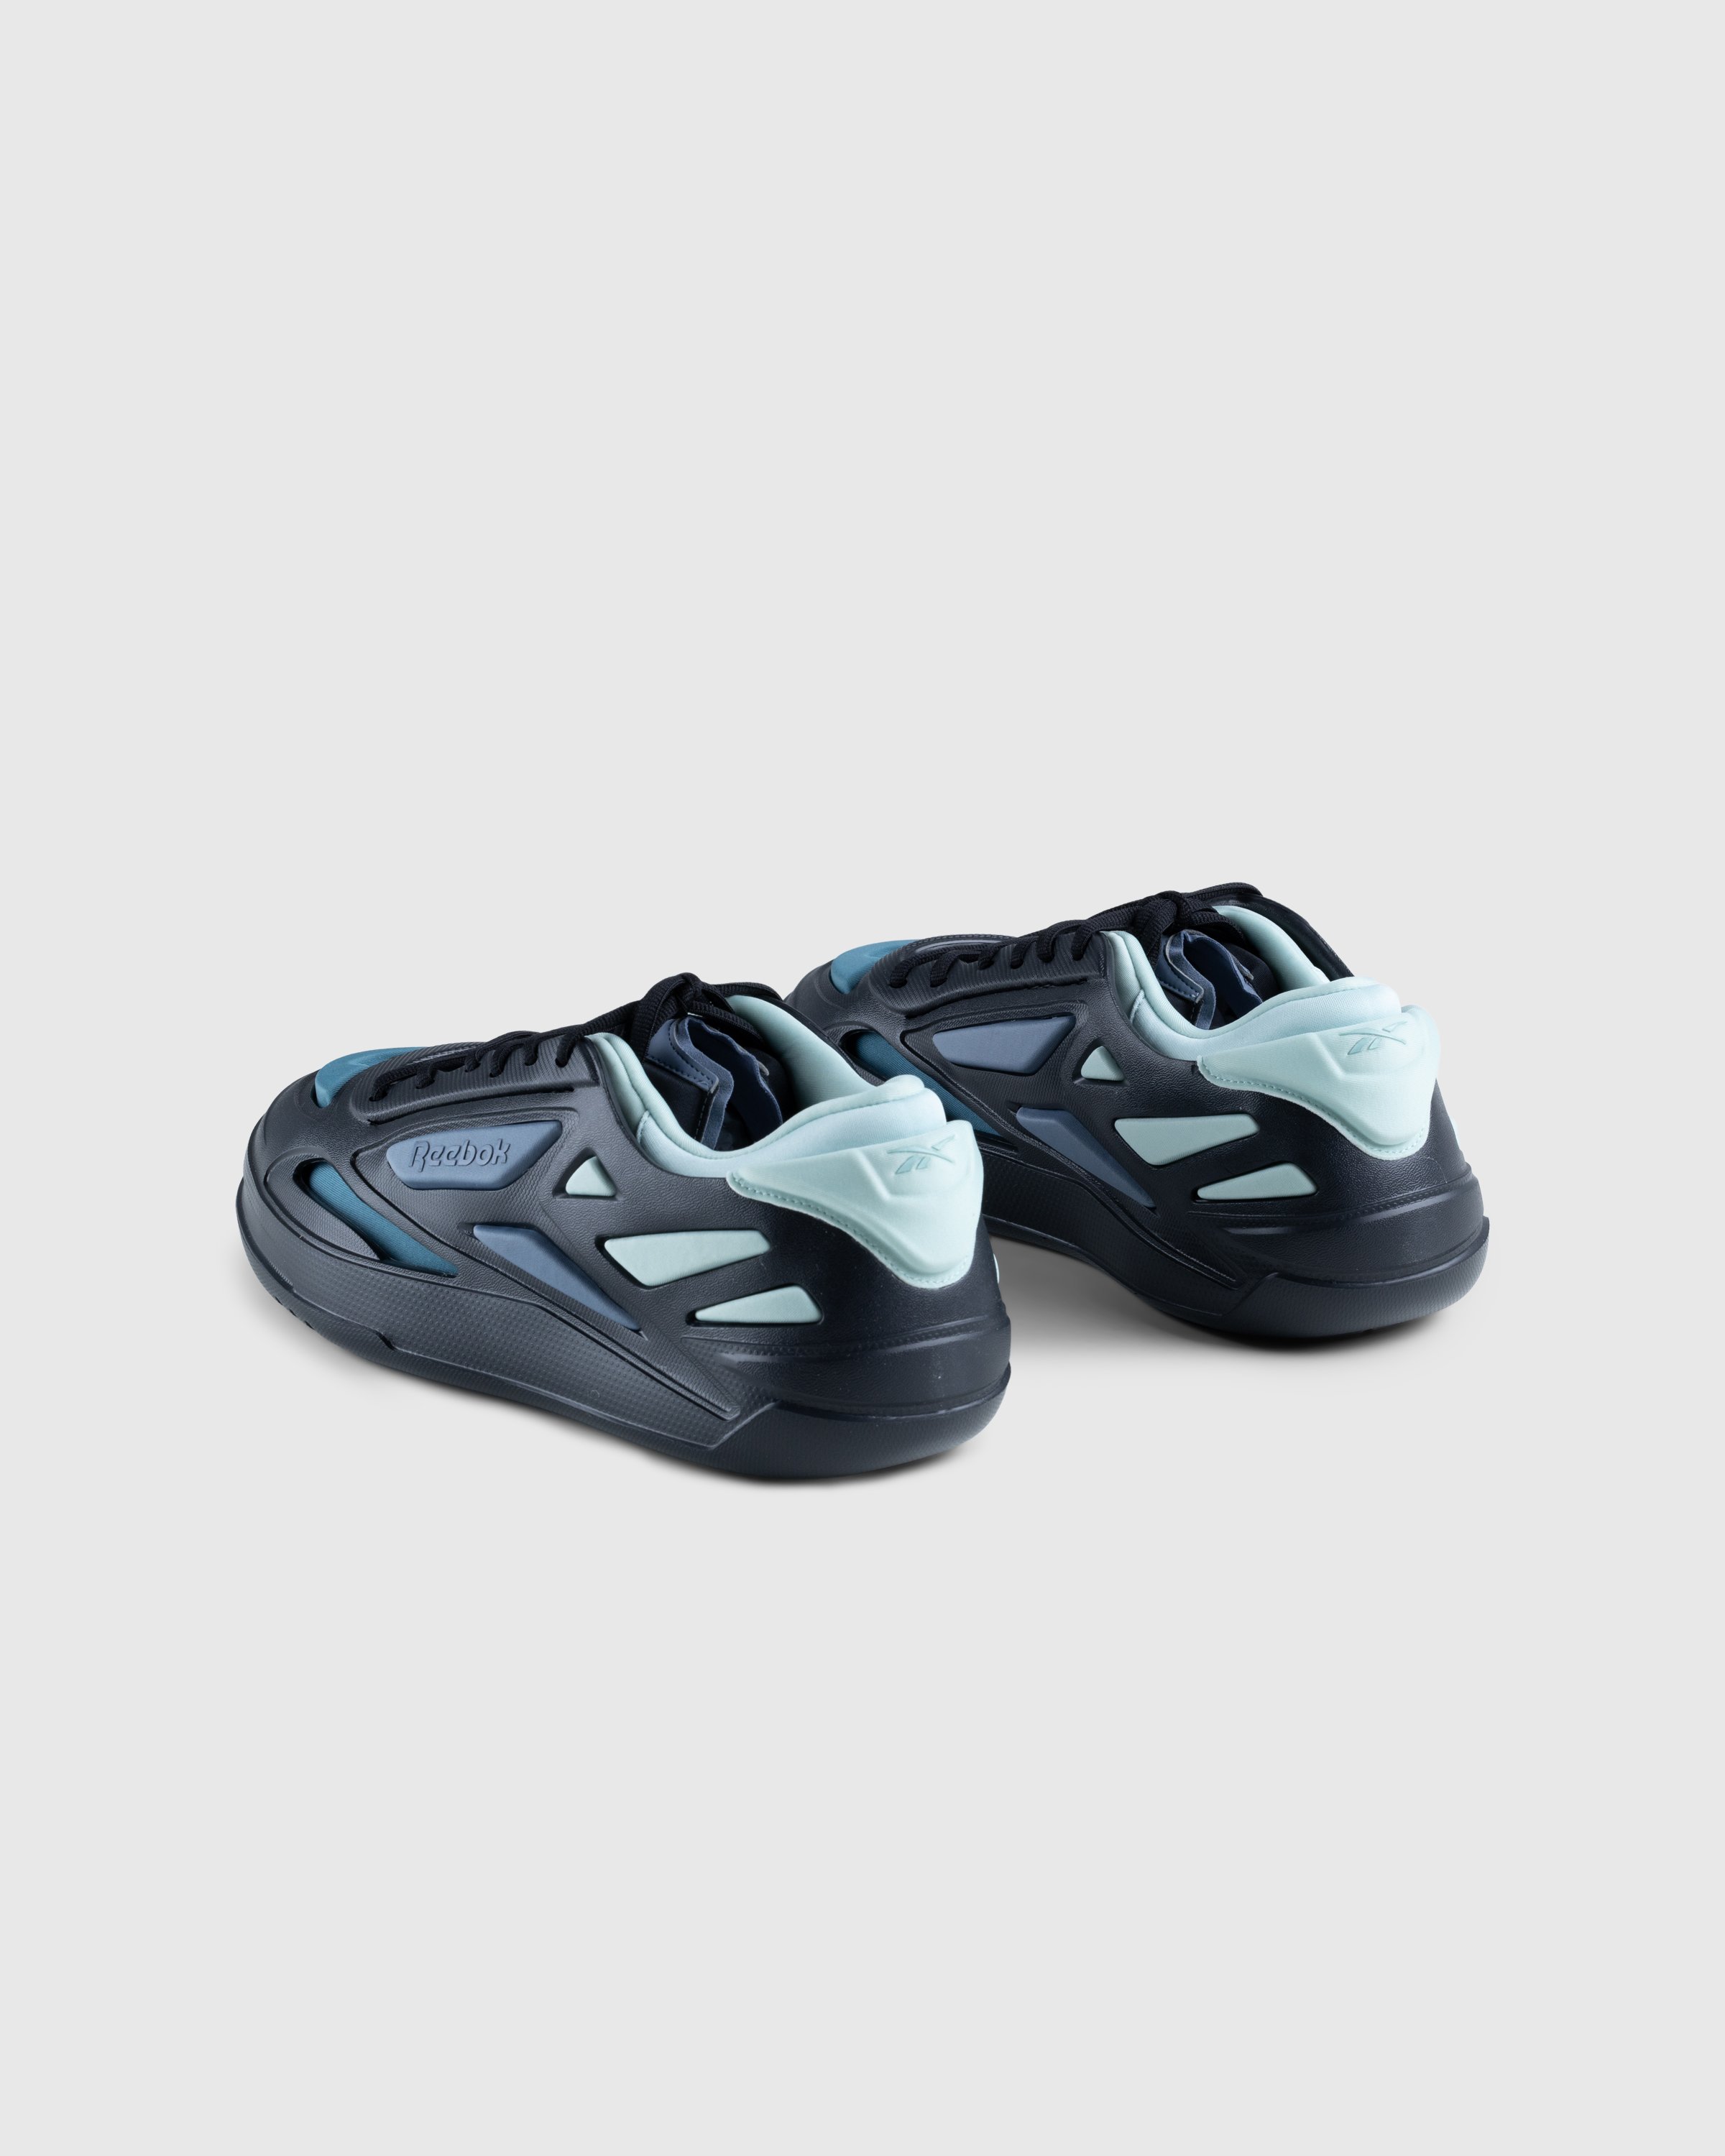 Reebok - Future Club C Black/Dusty Blue - Footwear - Multi - Image 4